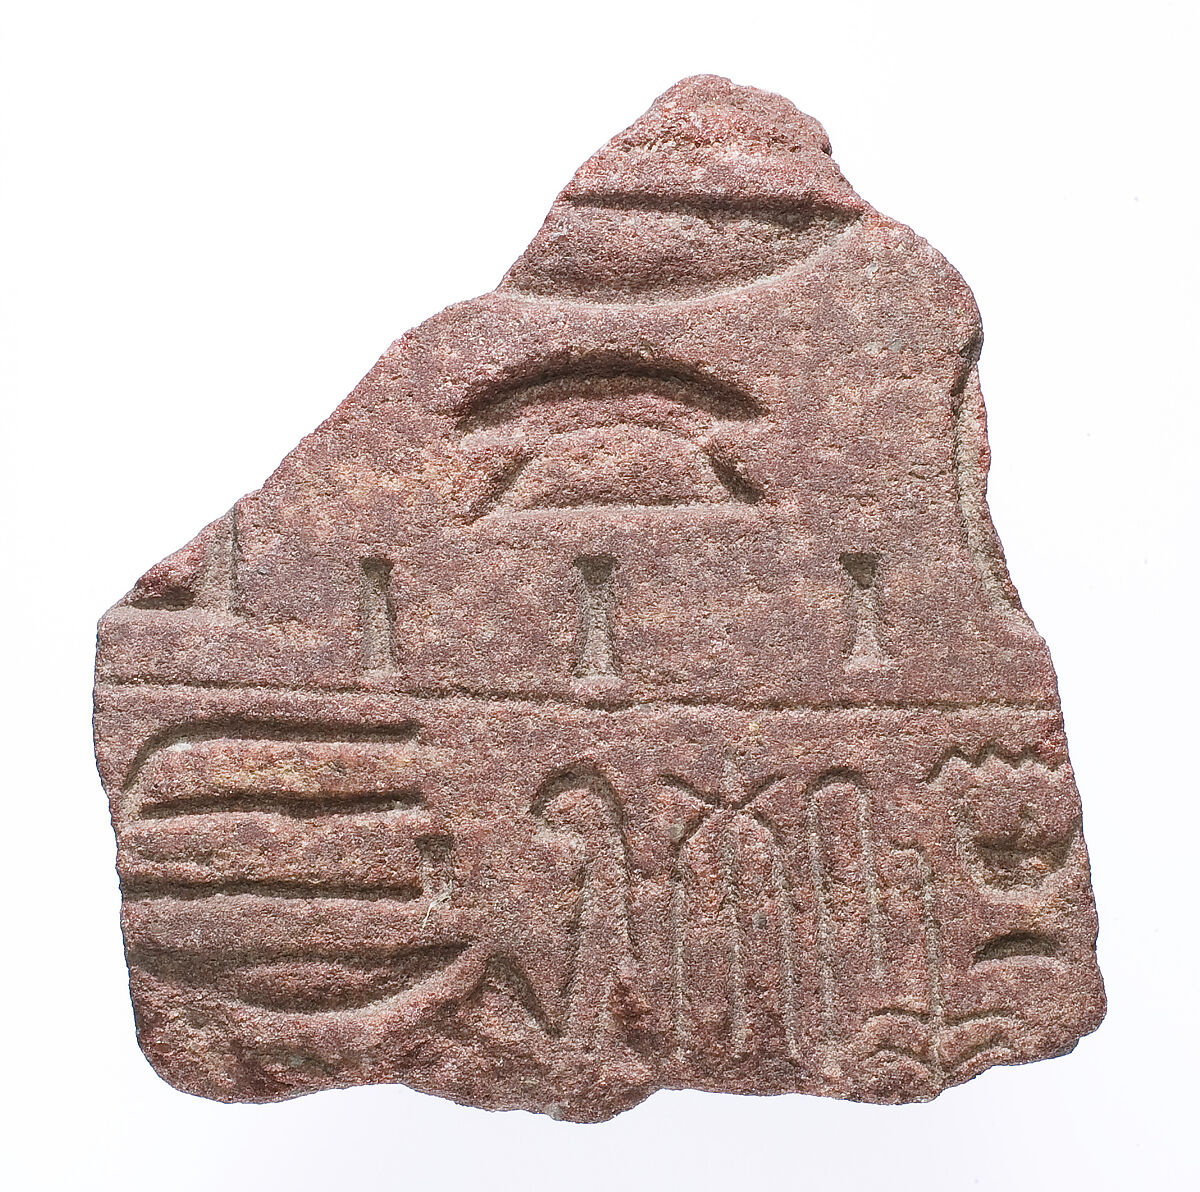 Element with names of Akhenaten and Meketaten, Red quartzite 